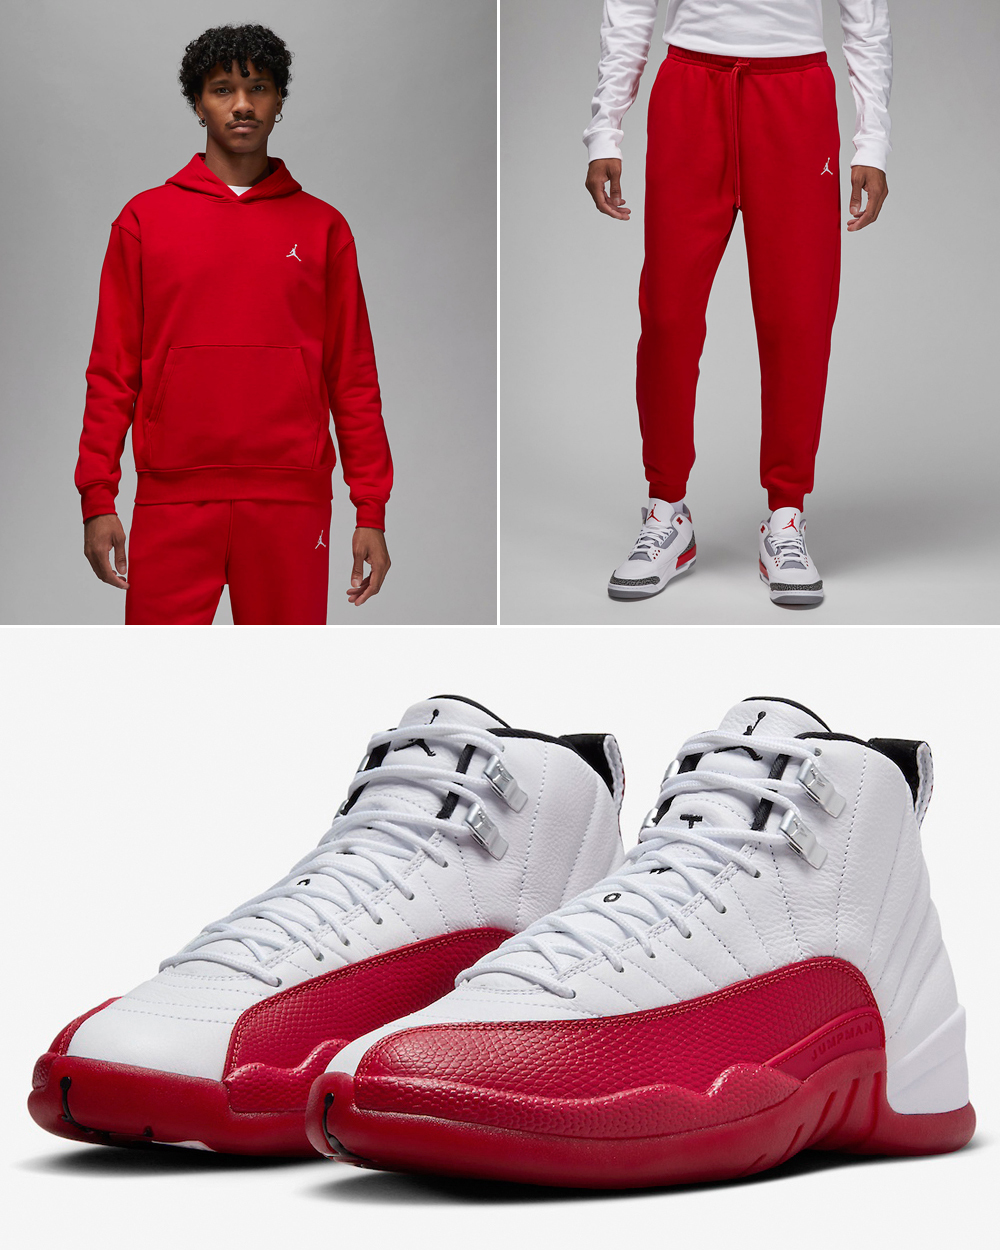 Styling the Jordan 12 Cherry #sullivansfits #styling #stylingtips